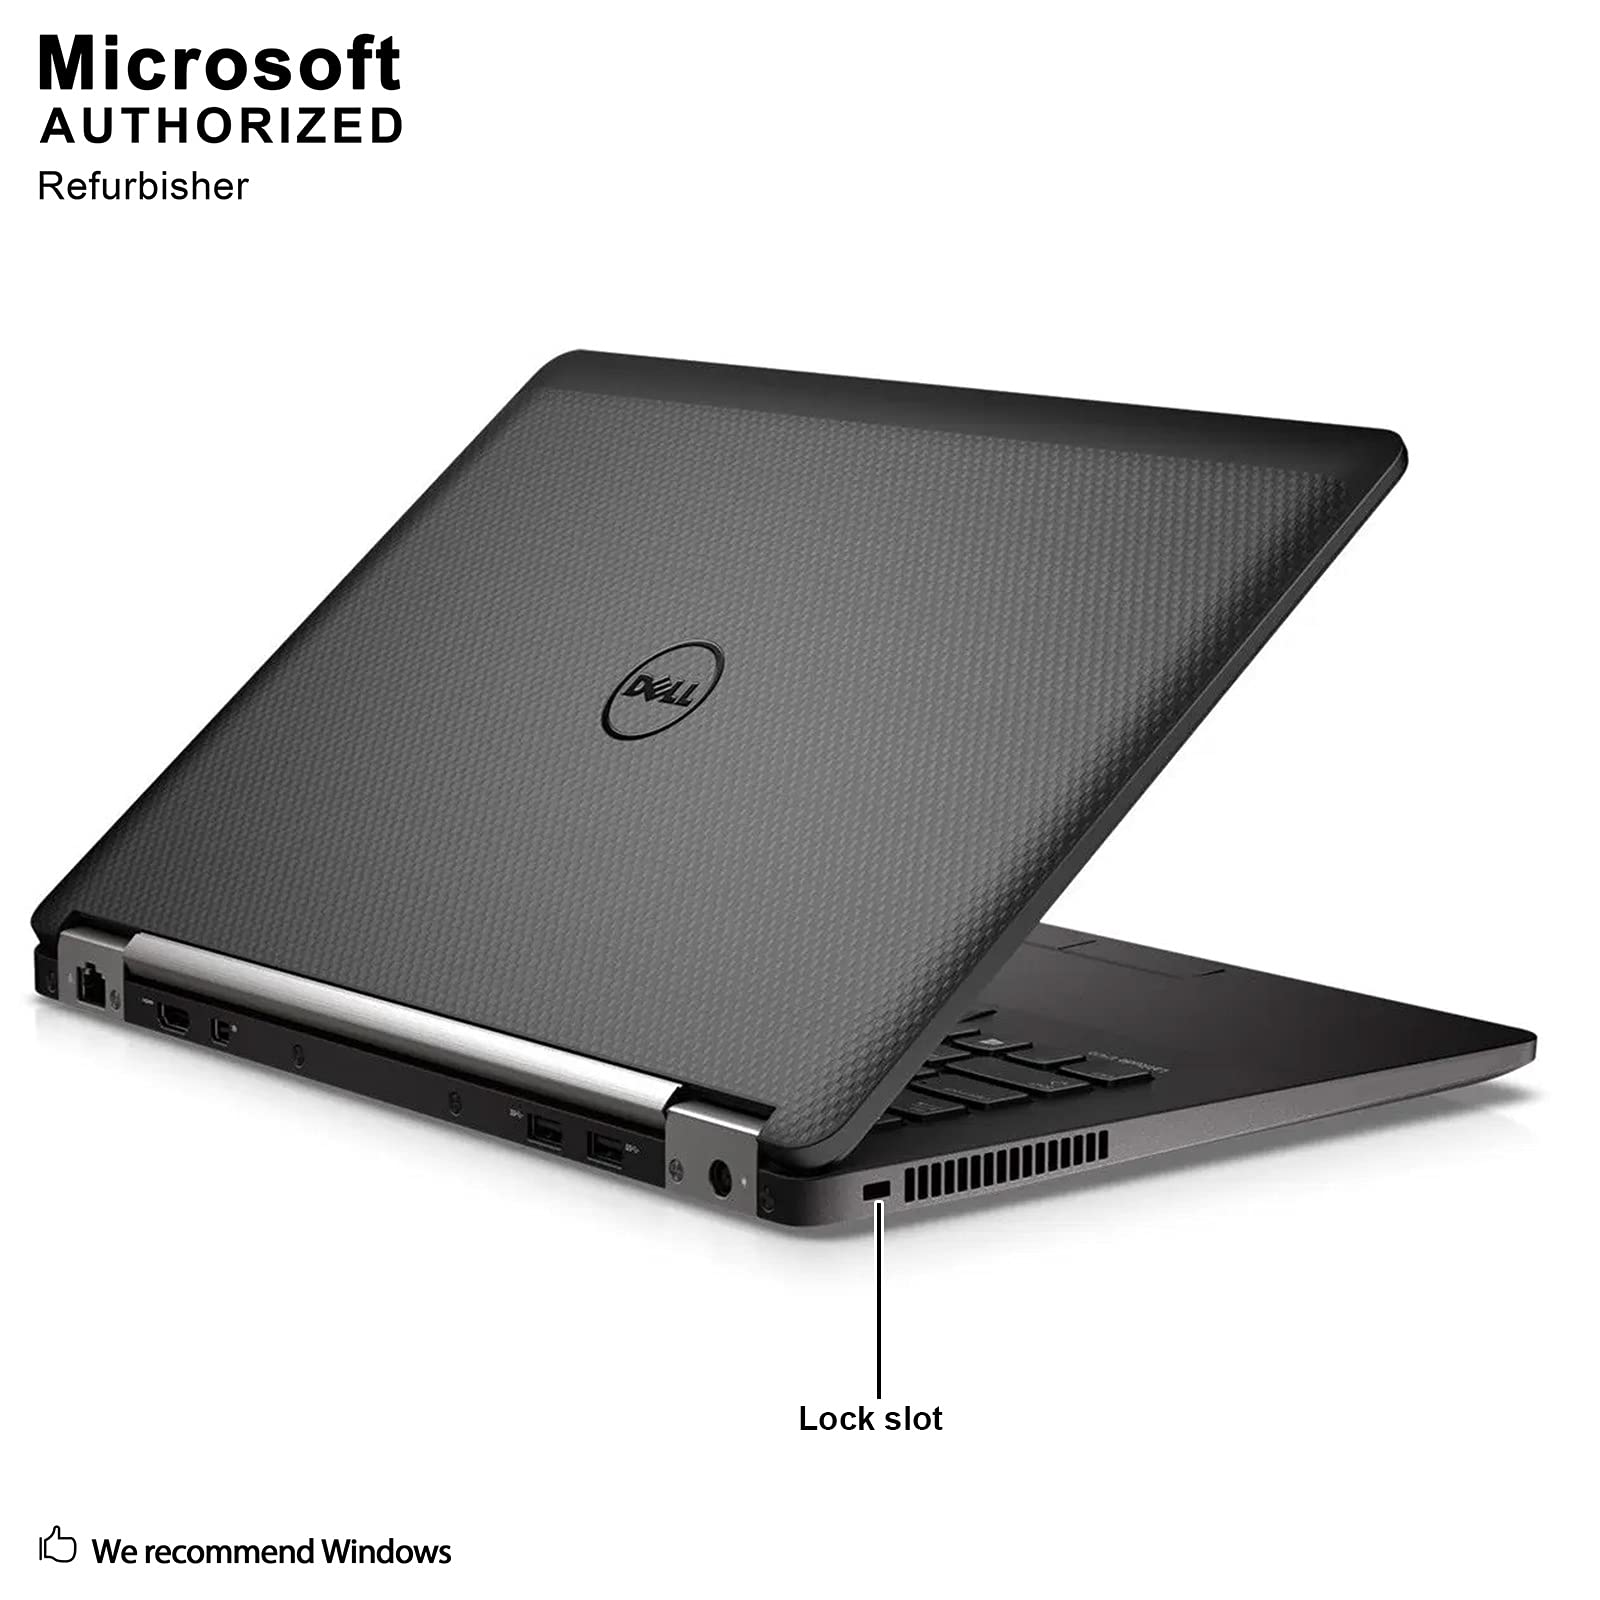 Mua Dell Latitude 14 7000 Series E7470 Ultrabook,  HD Anti-Glare  LCD, Intel Core i7-6600U, 8 GB DDR4, 256 GB SSD, Windows 10 Pro (Renewed)  trên Amazon Mỹ chính hãng 2023 | Fado